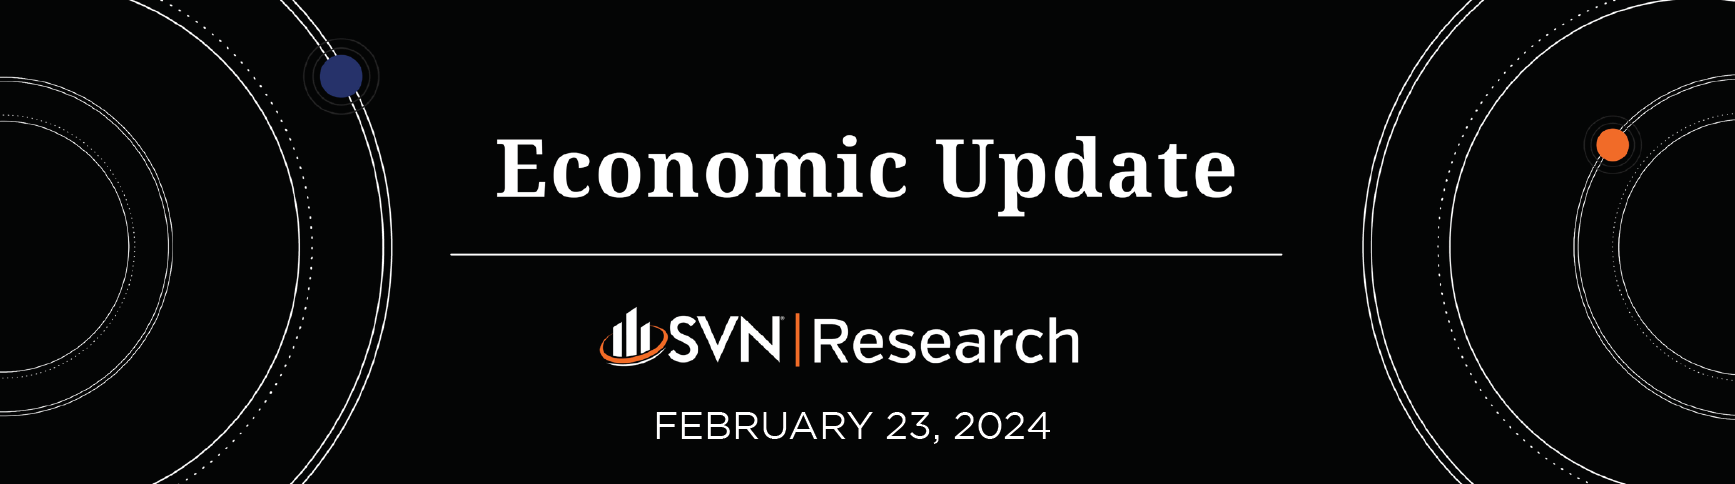 SVN | Research Economic Update 02.23.2024